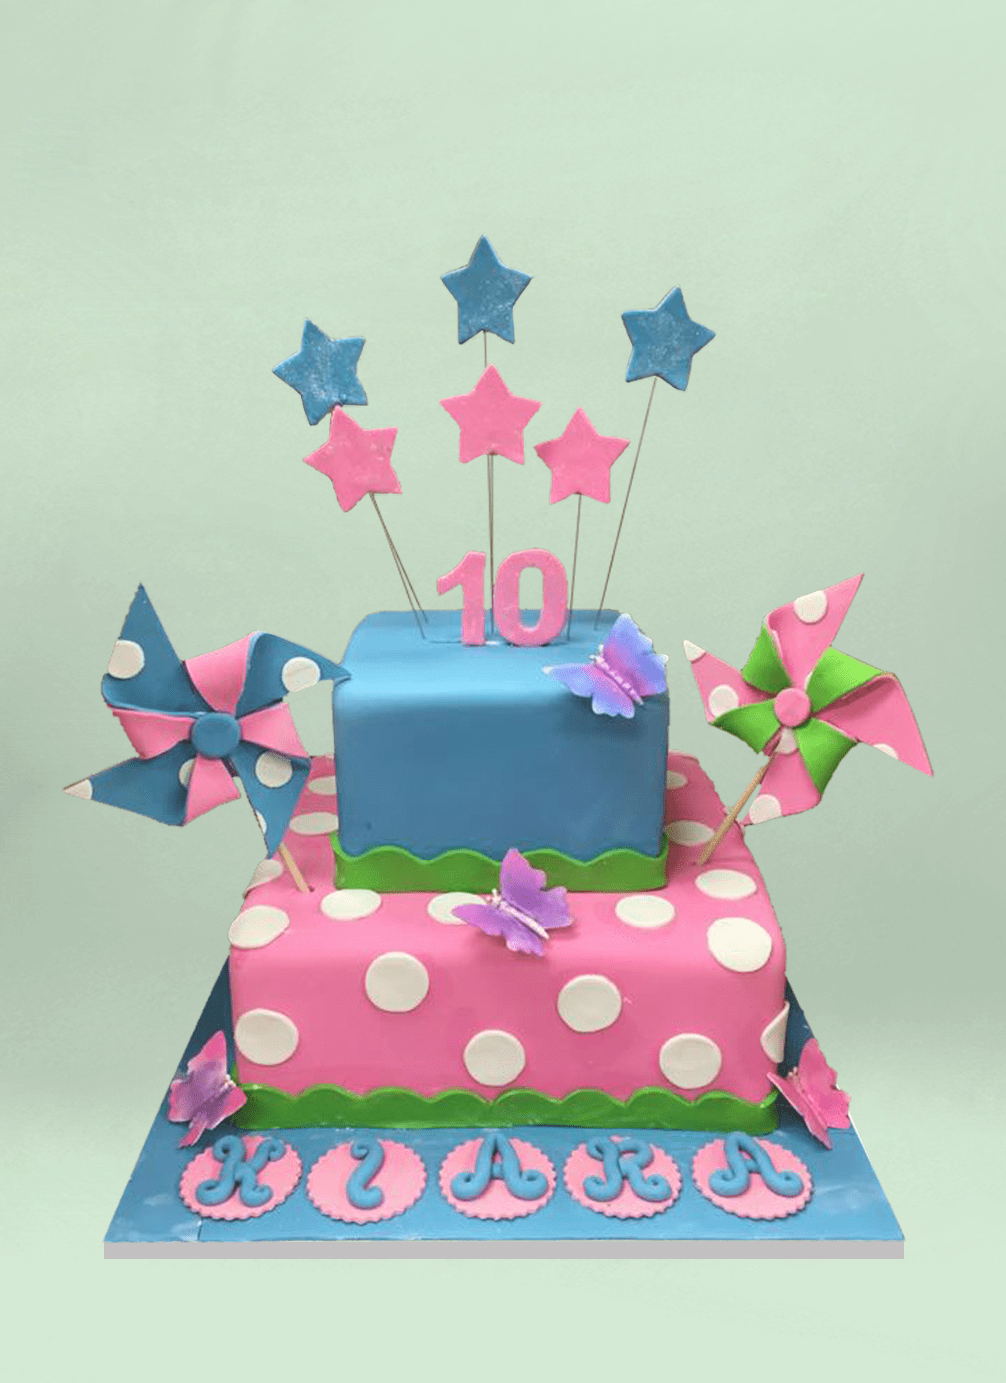 Photo: square fondant cake with fondant pinwheels and stars sticking out